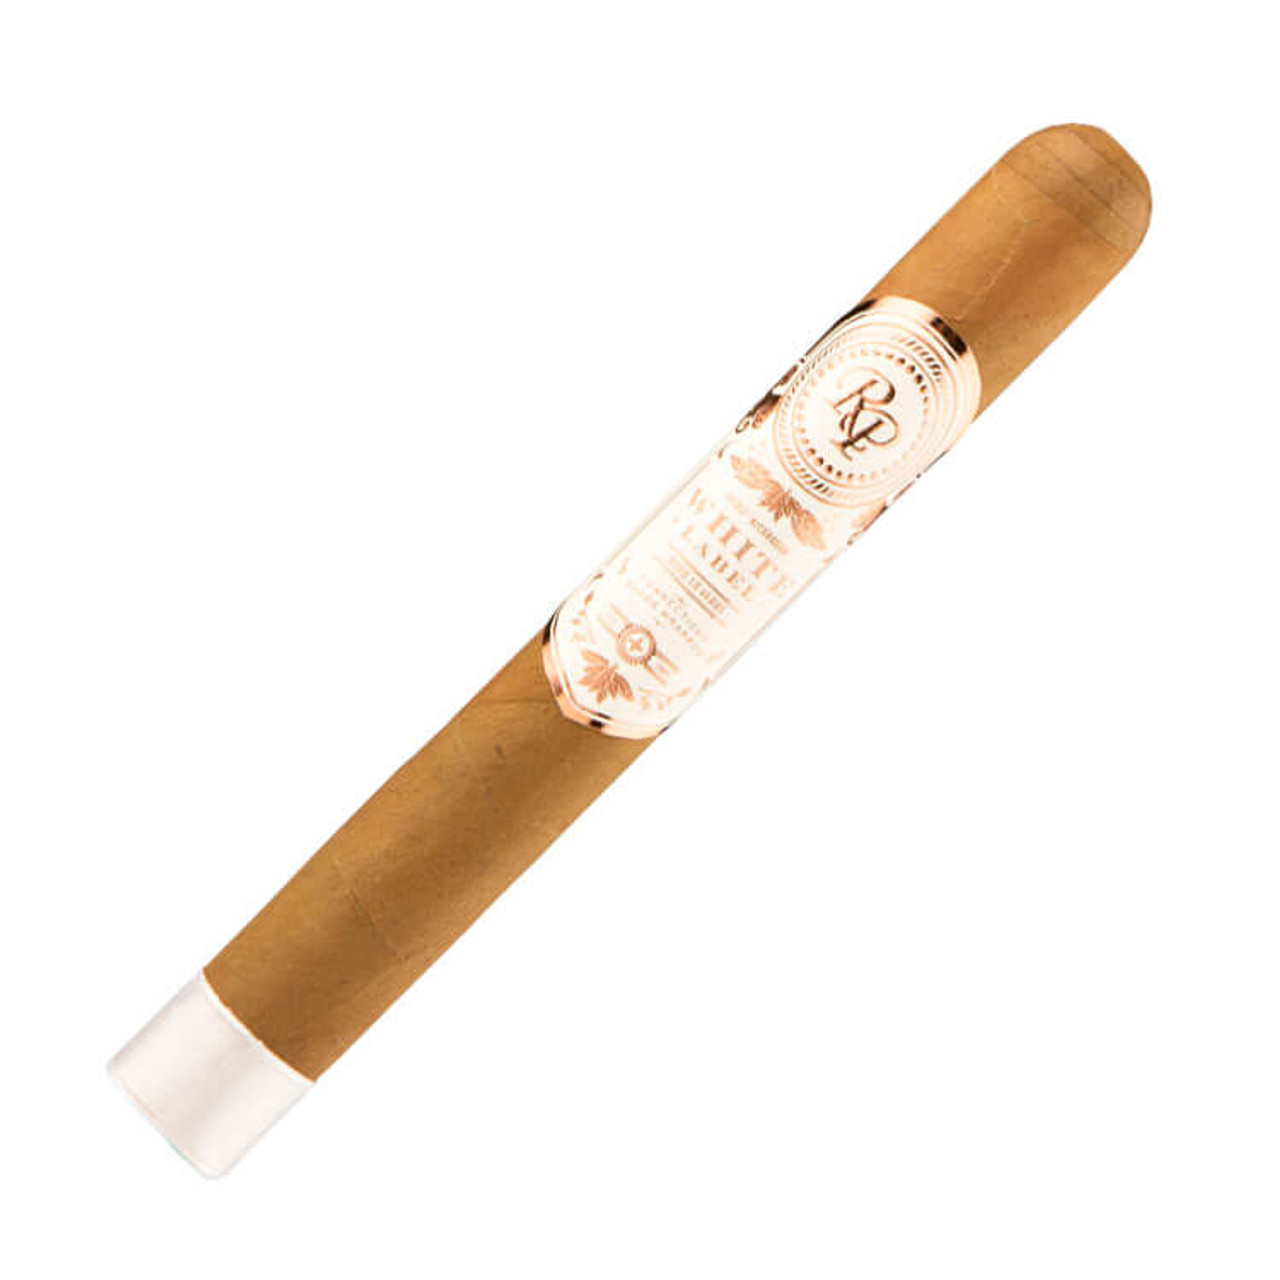 Rocky Patel White Label Robusto Cigars - 5 x 50 Single